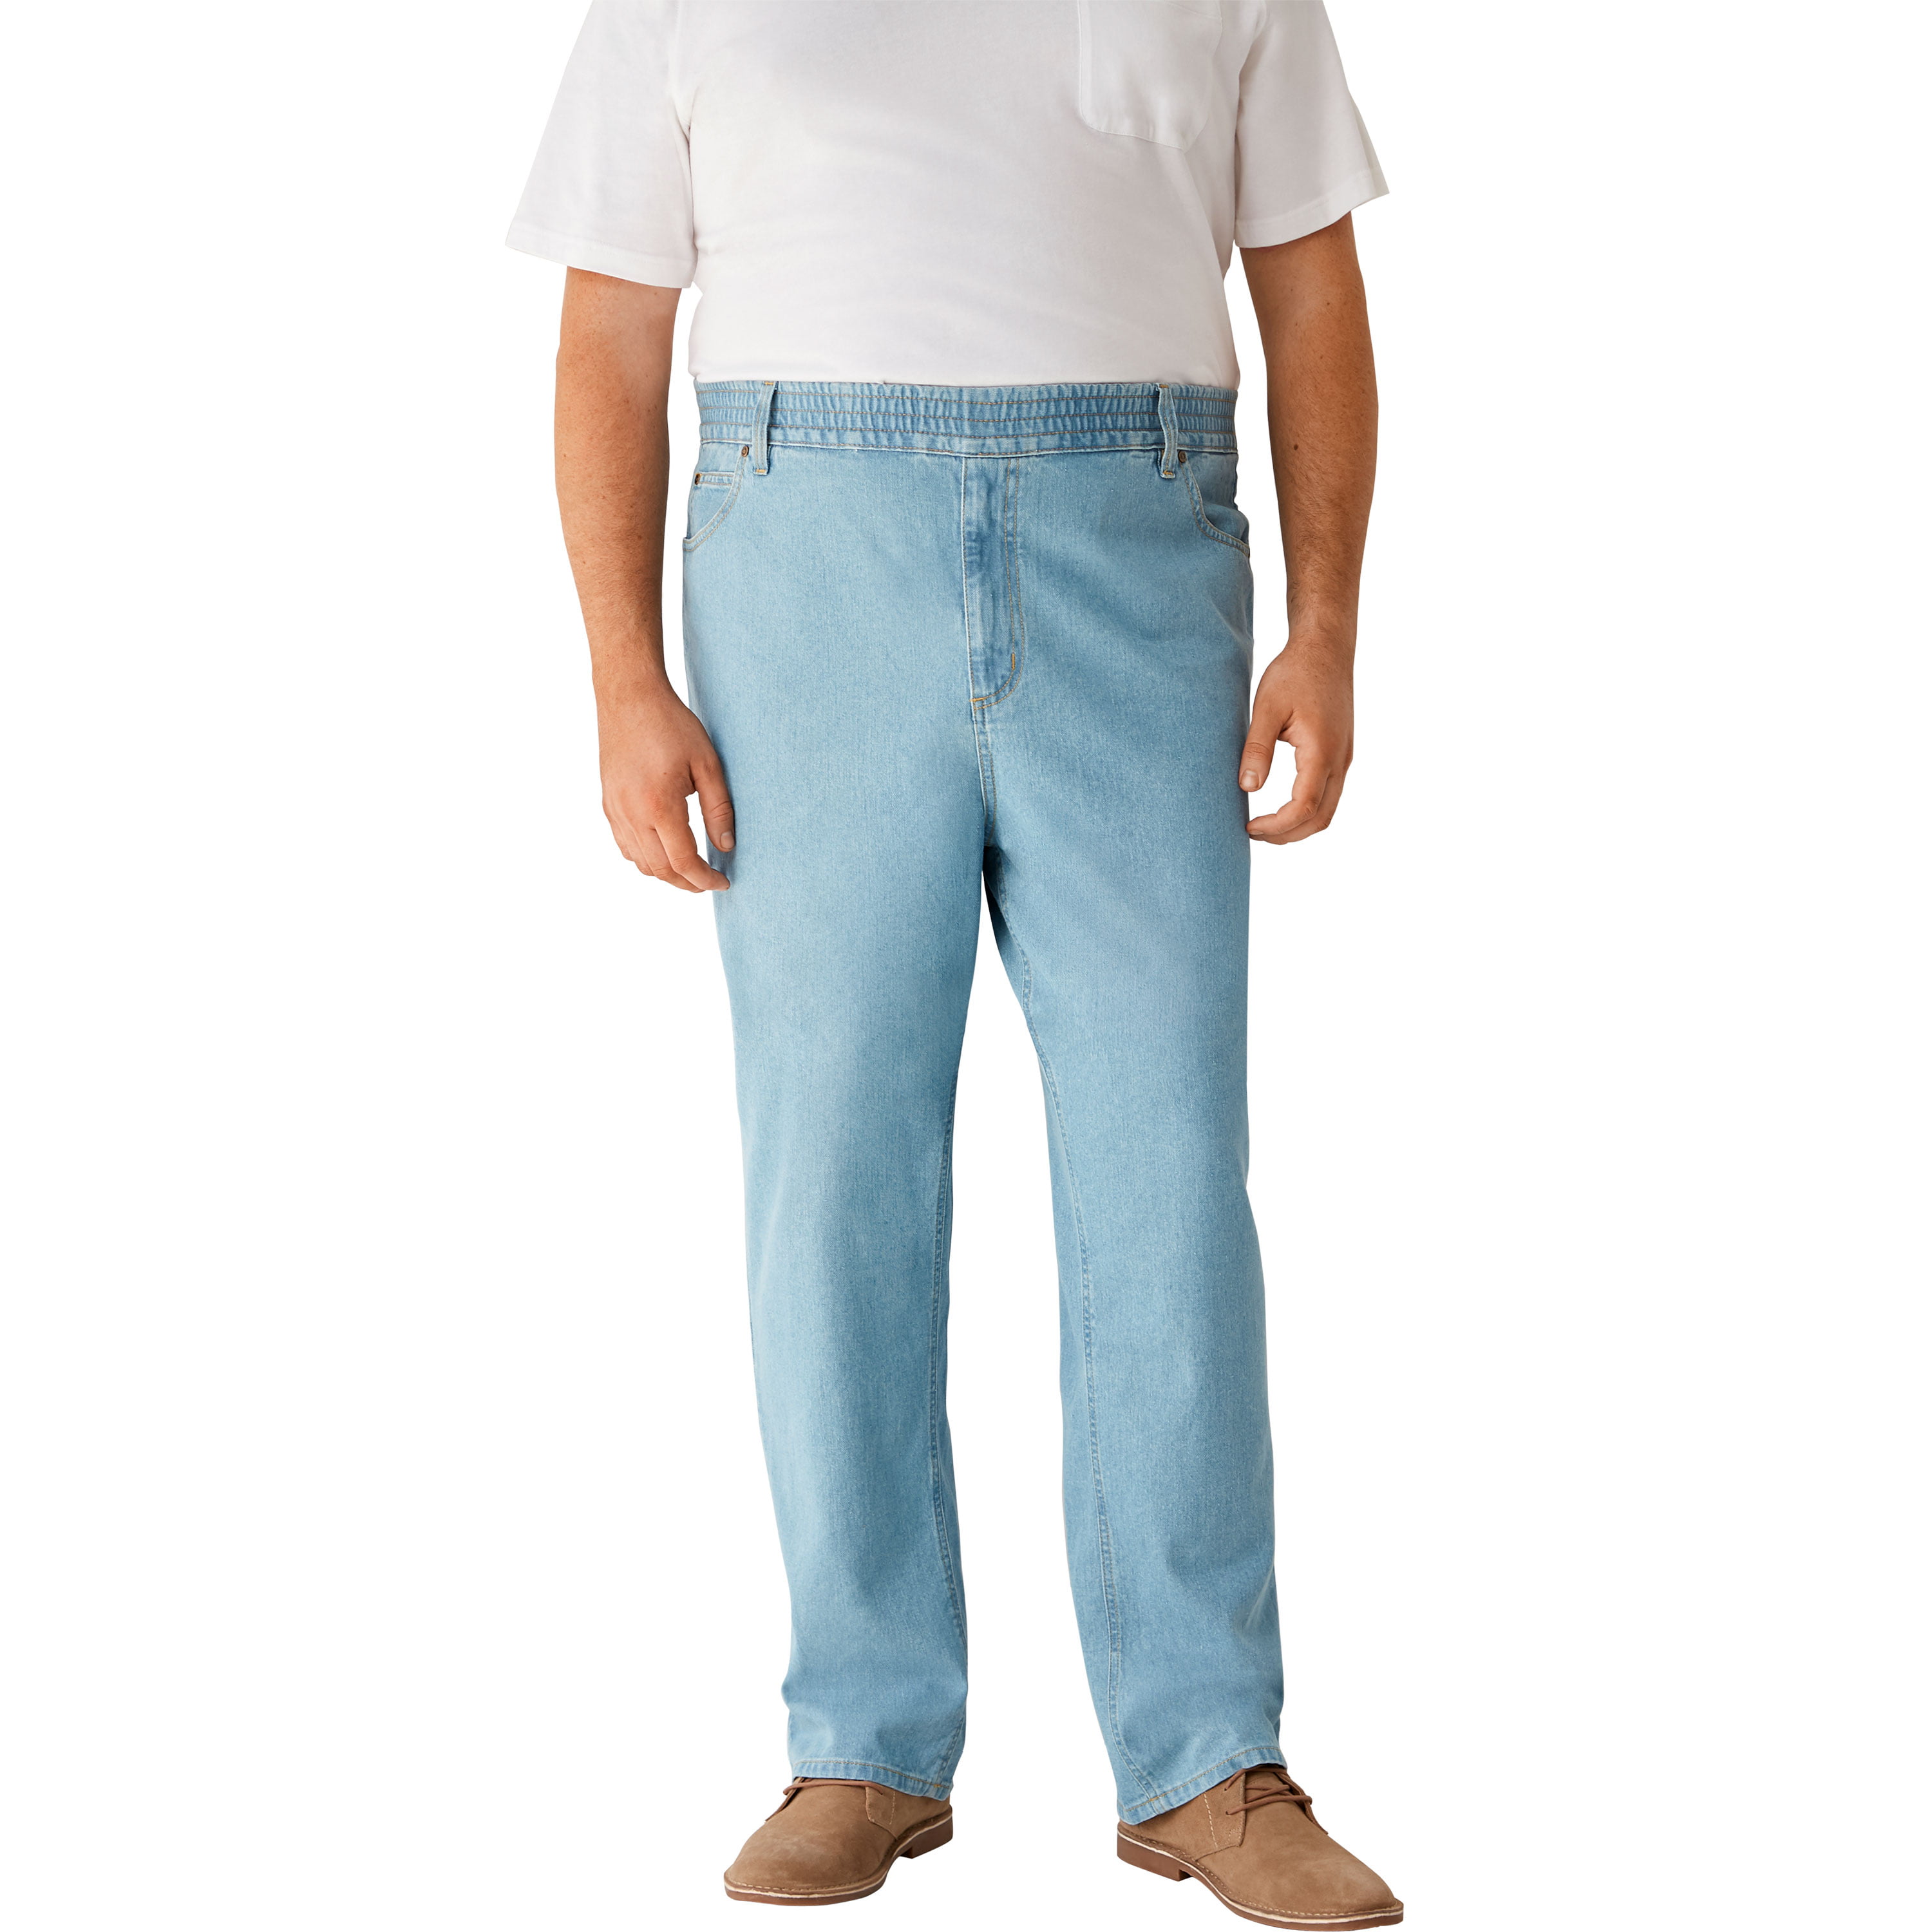 walmart big and tall jeans